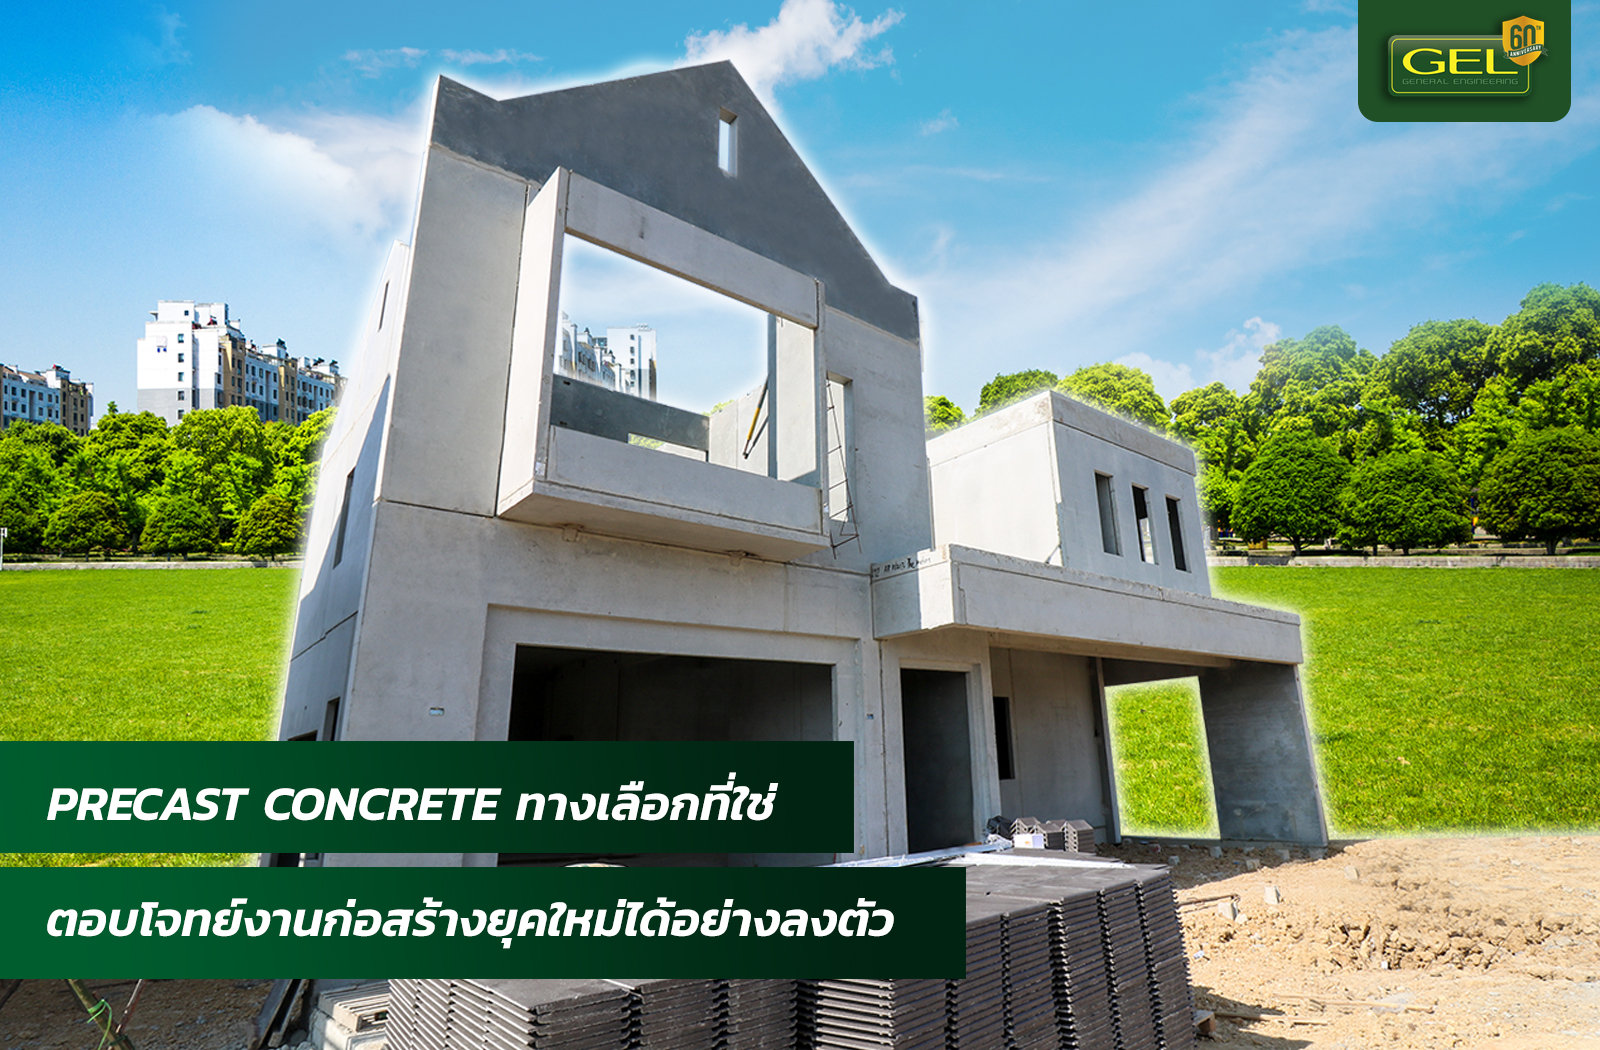 Precast Concrete ทางเลือกที่ใช่ ตอบโจทย์งานก่อสร้างยุคใหม่ได้อย่างลงตัว